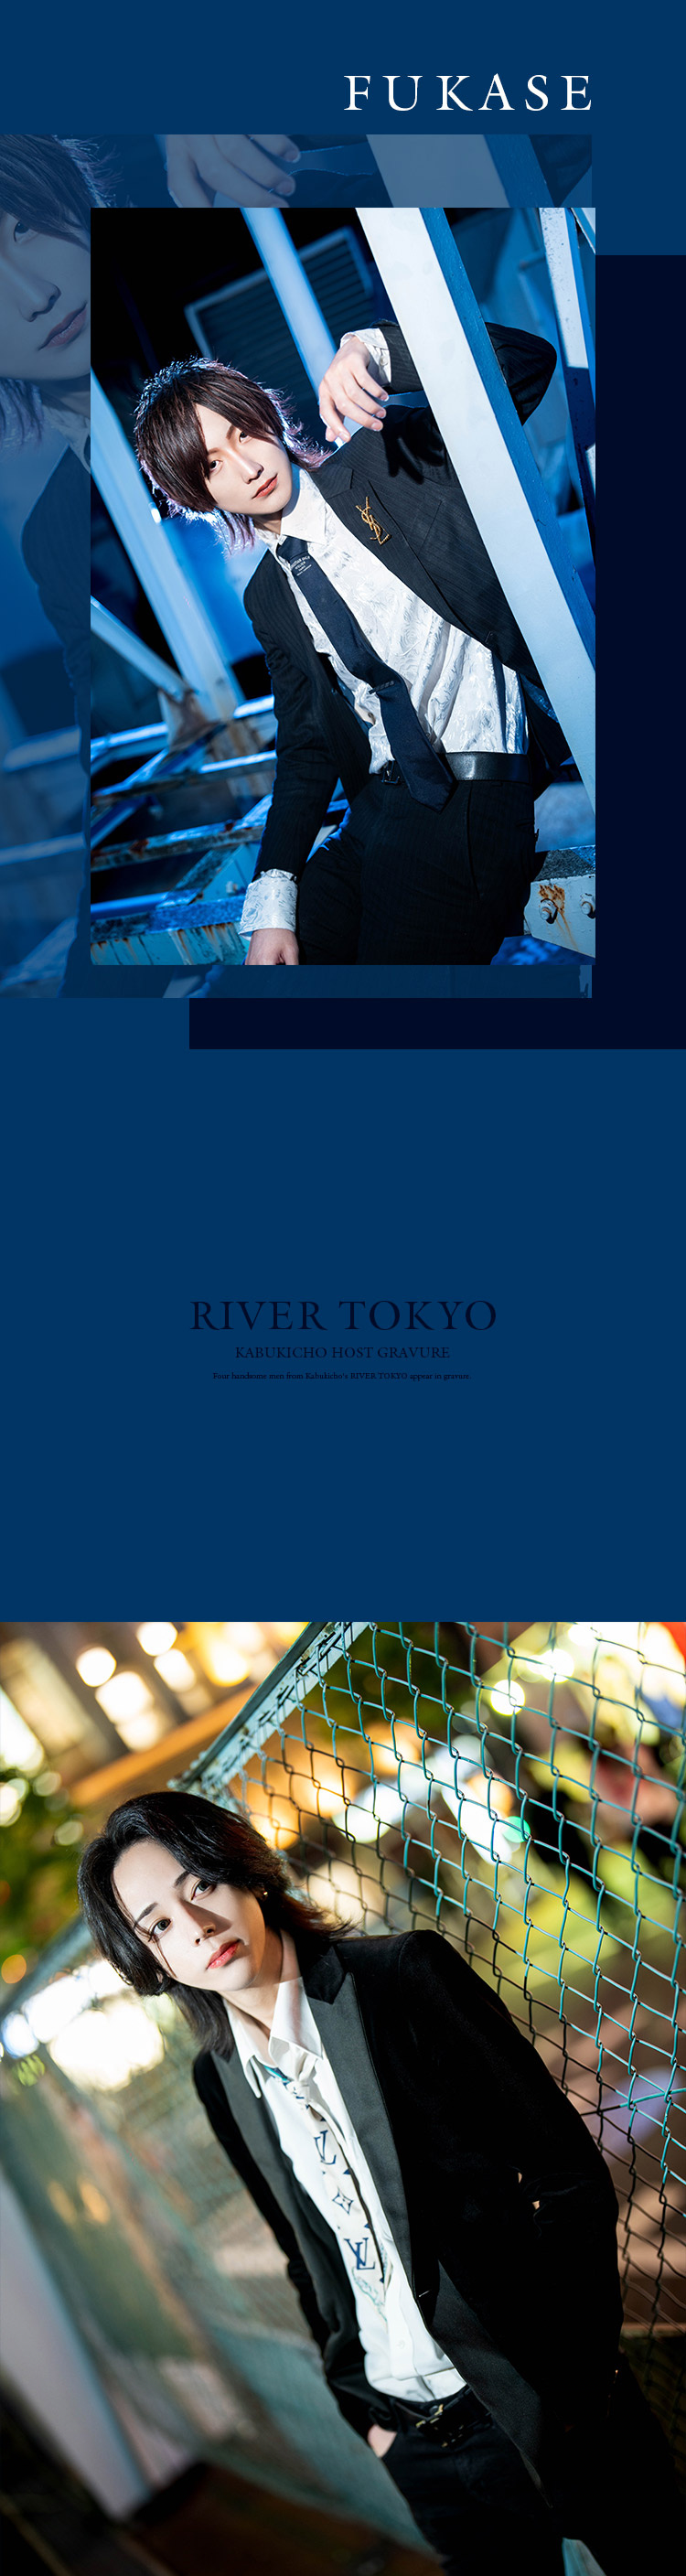 『RIVER TOKYO』のイケメン4人衆がグラビアに登場!!